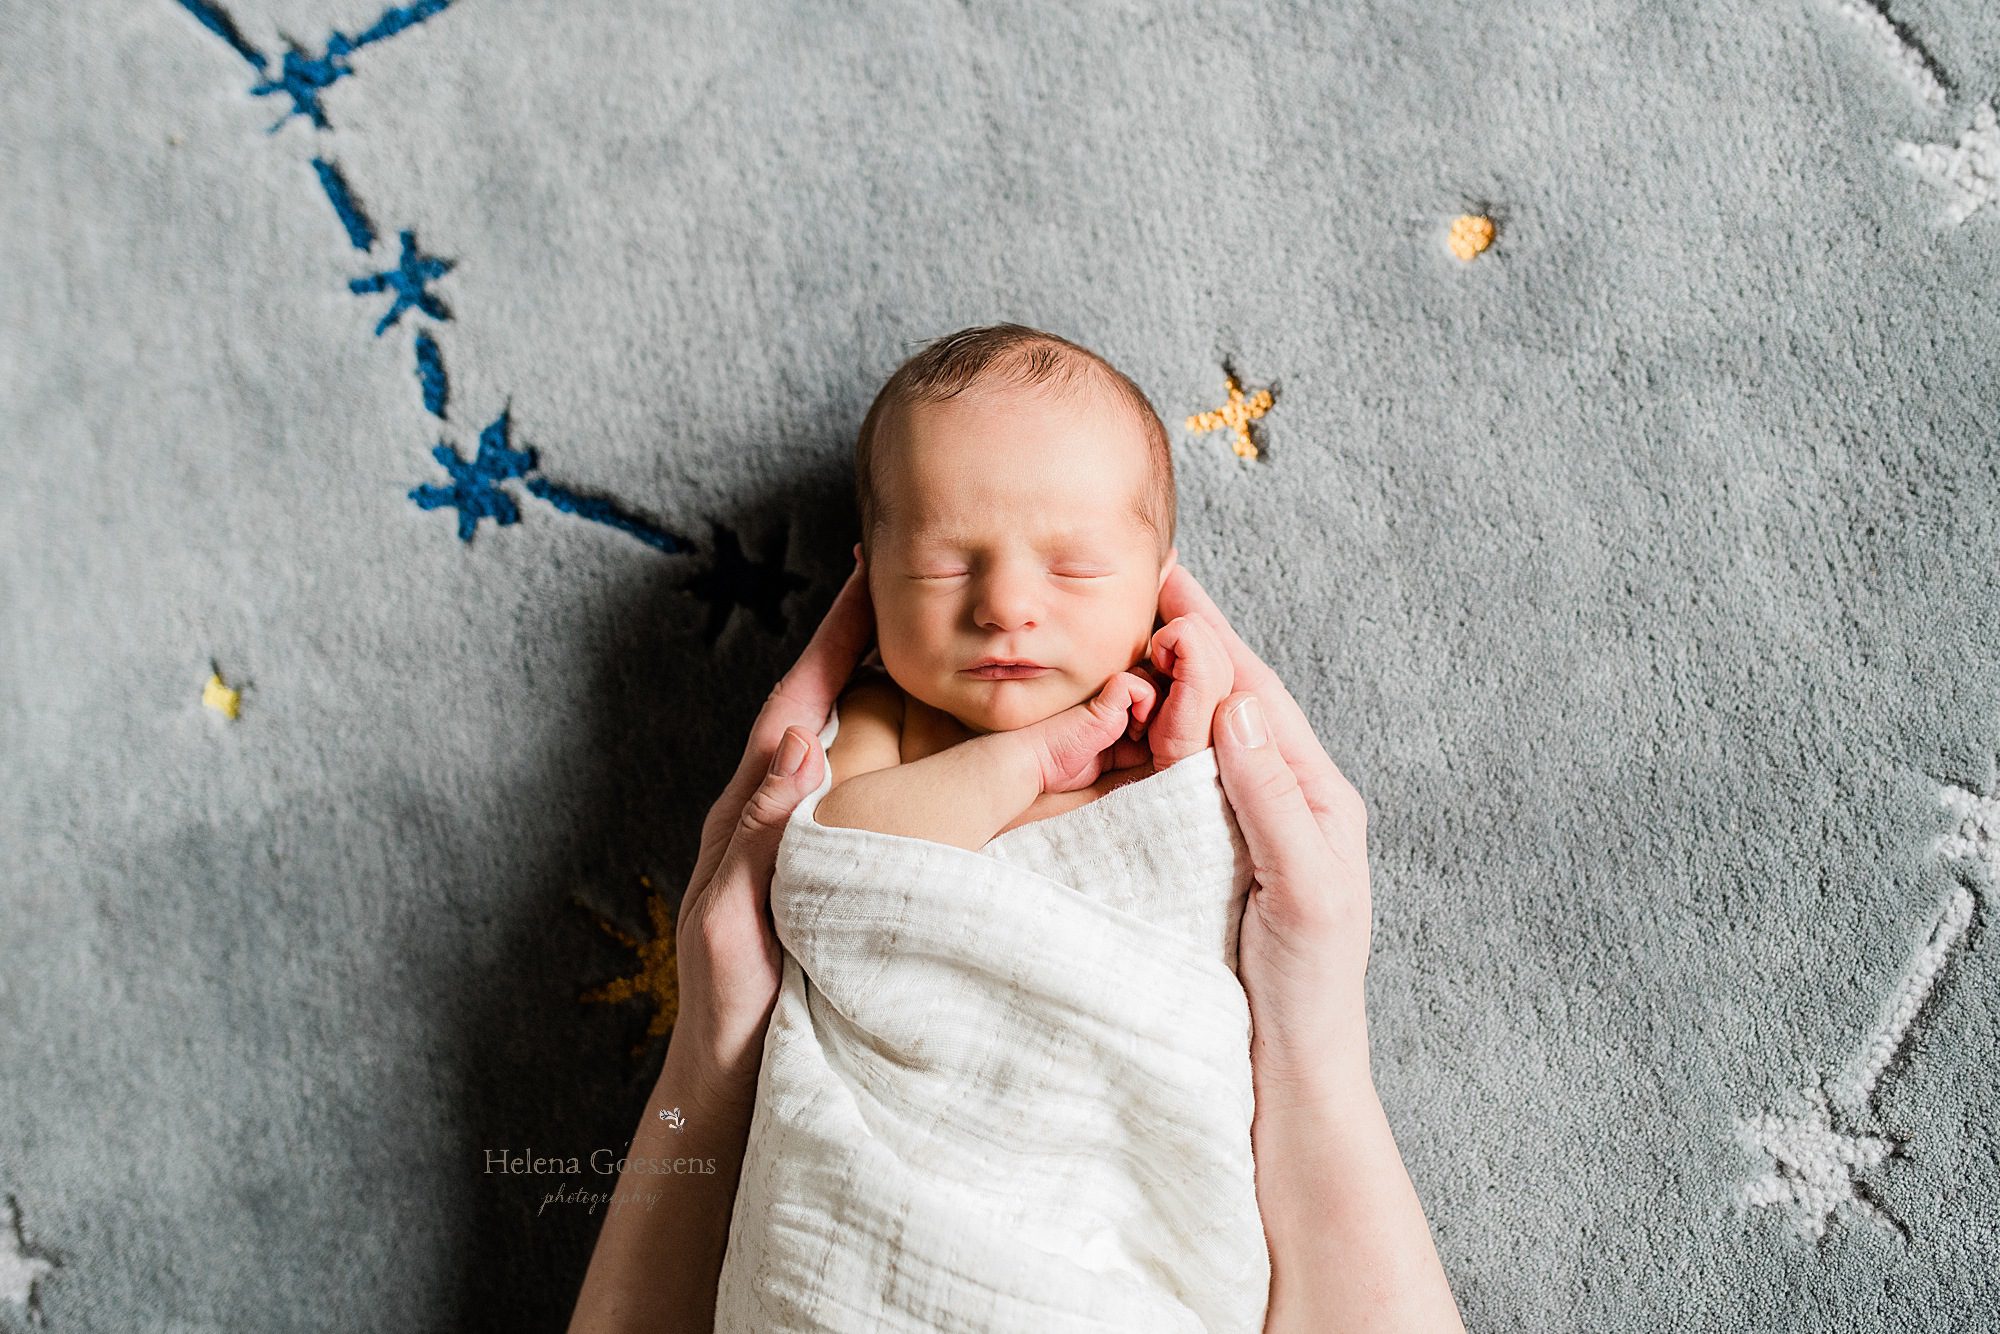 Boston newborn photographer Helena Goessens Photography captures lifestyle newborn session